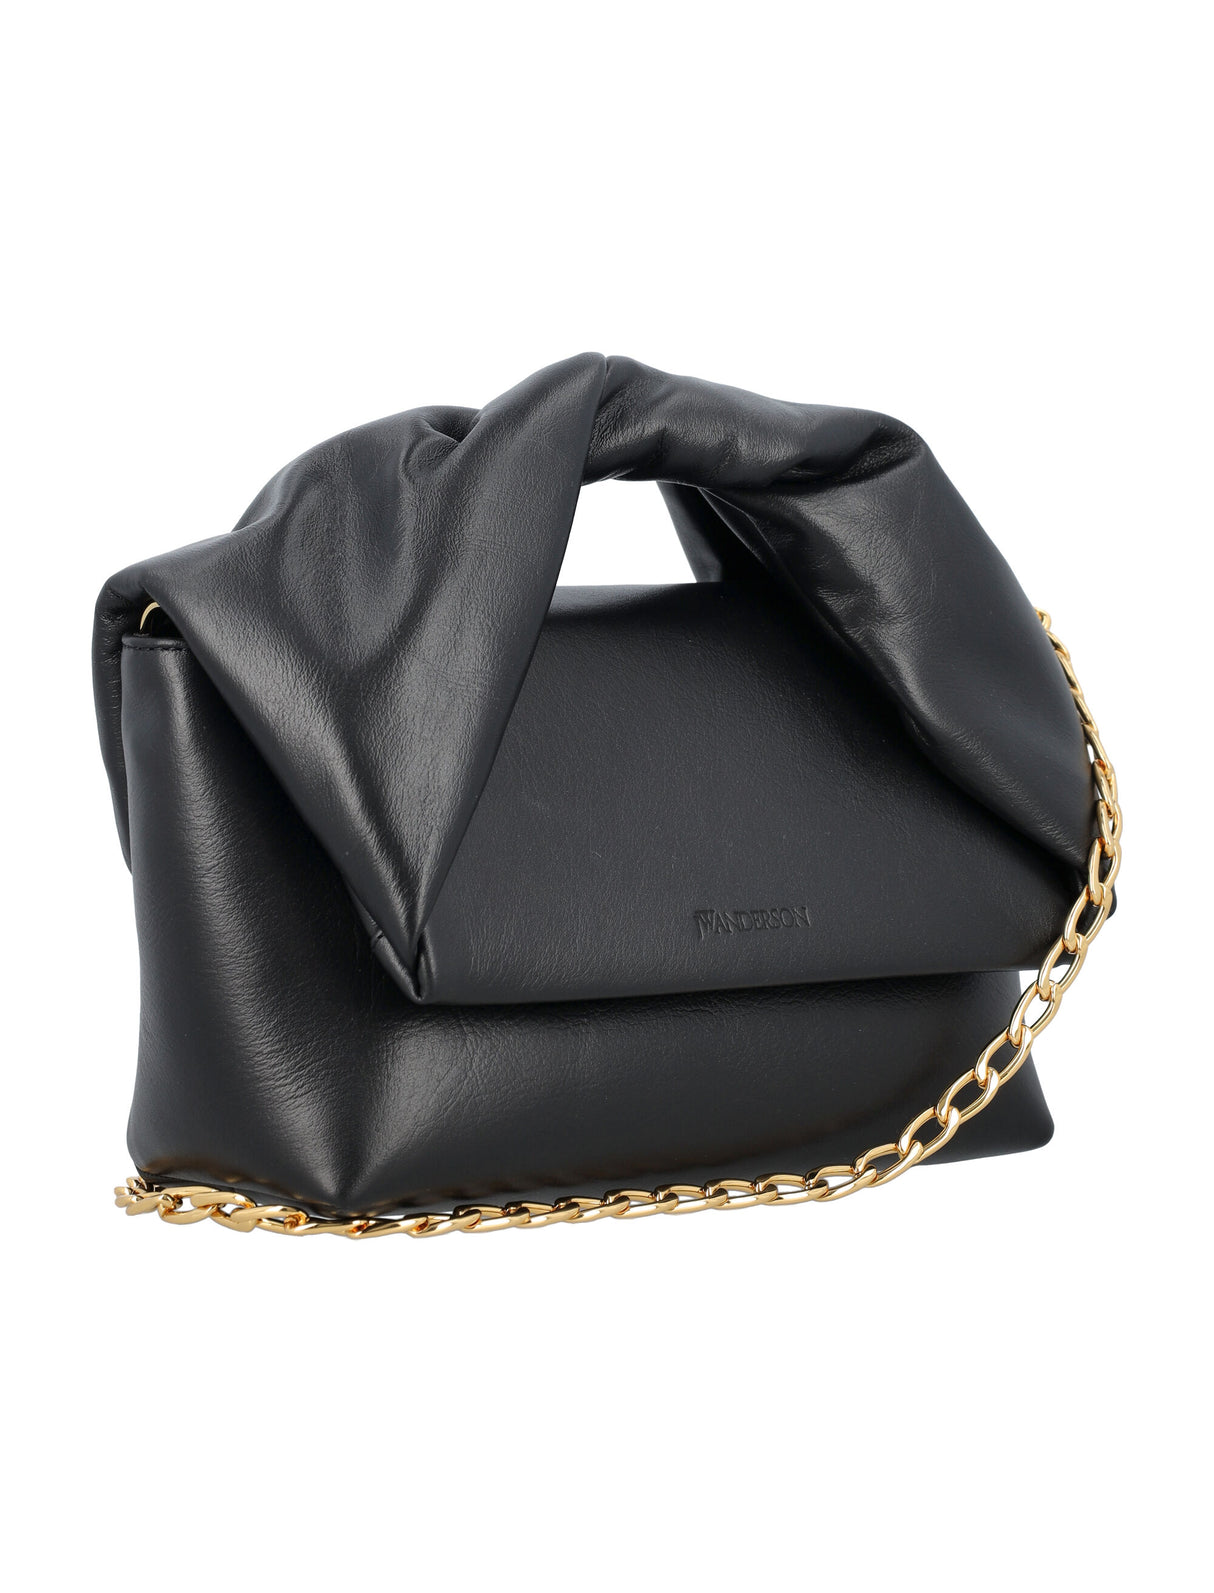 JW ANDERSON Smooth Leather Medium Twister Handbag with Gold Chain and Twisted Handle - Versatile Clutch, Shoulder, & Crossbody Bag - Black - 17cm x 29cm x 5cm